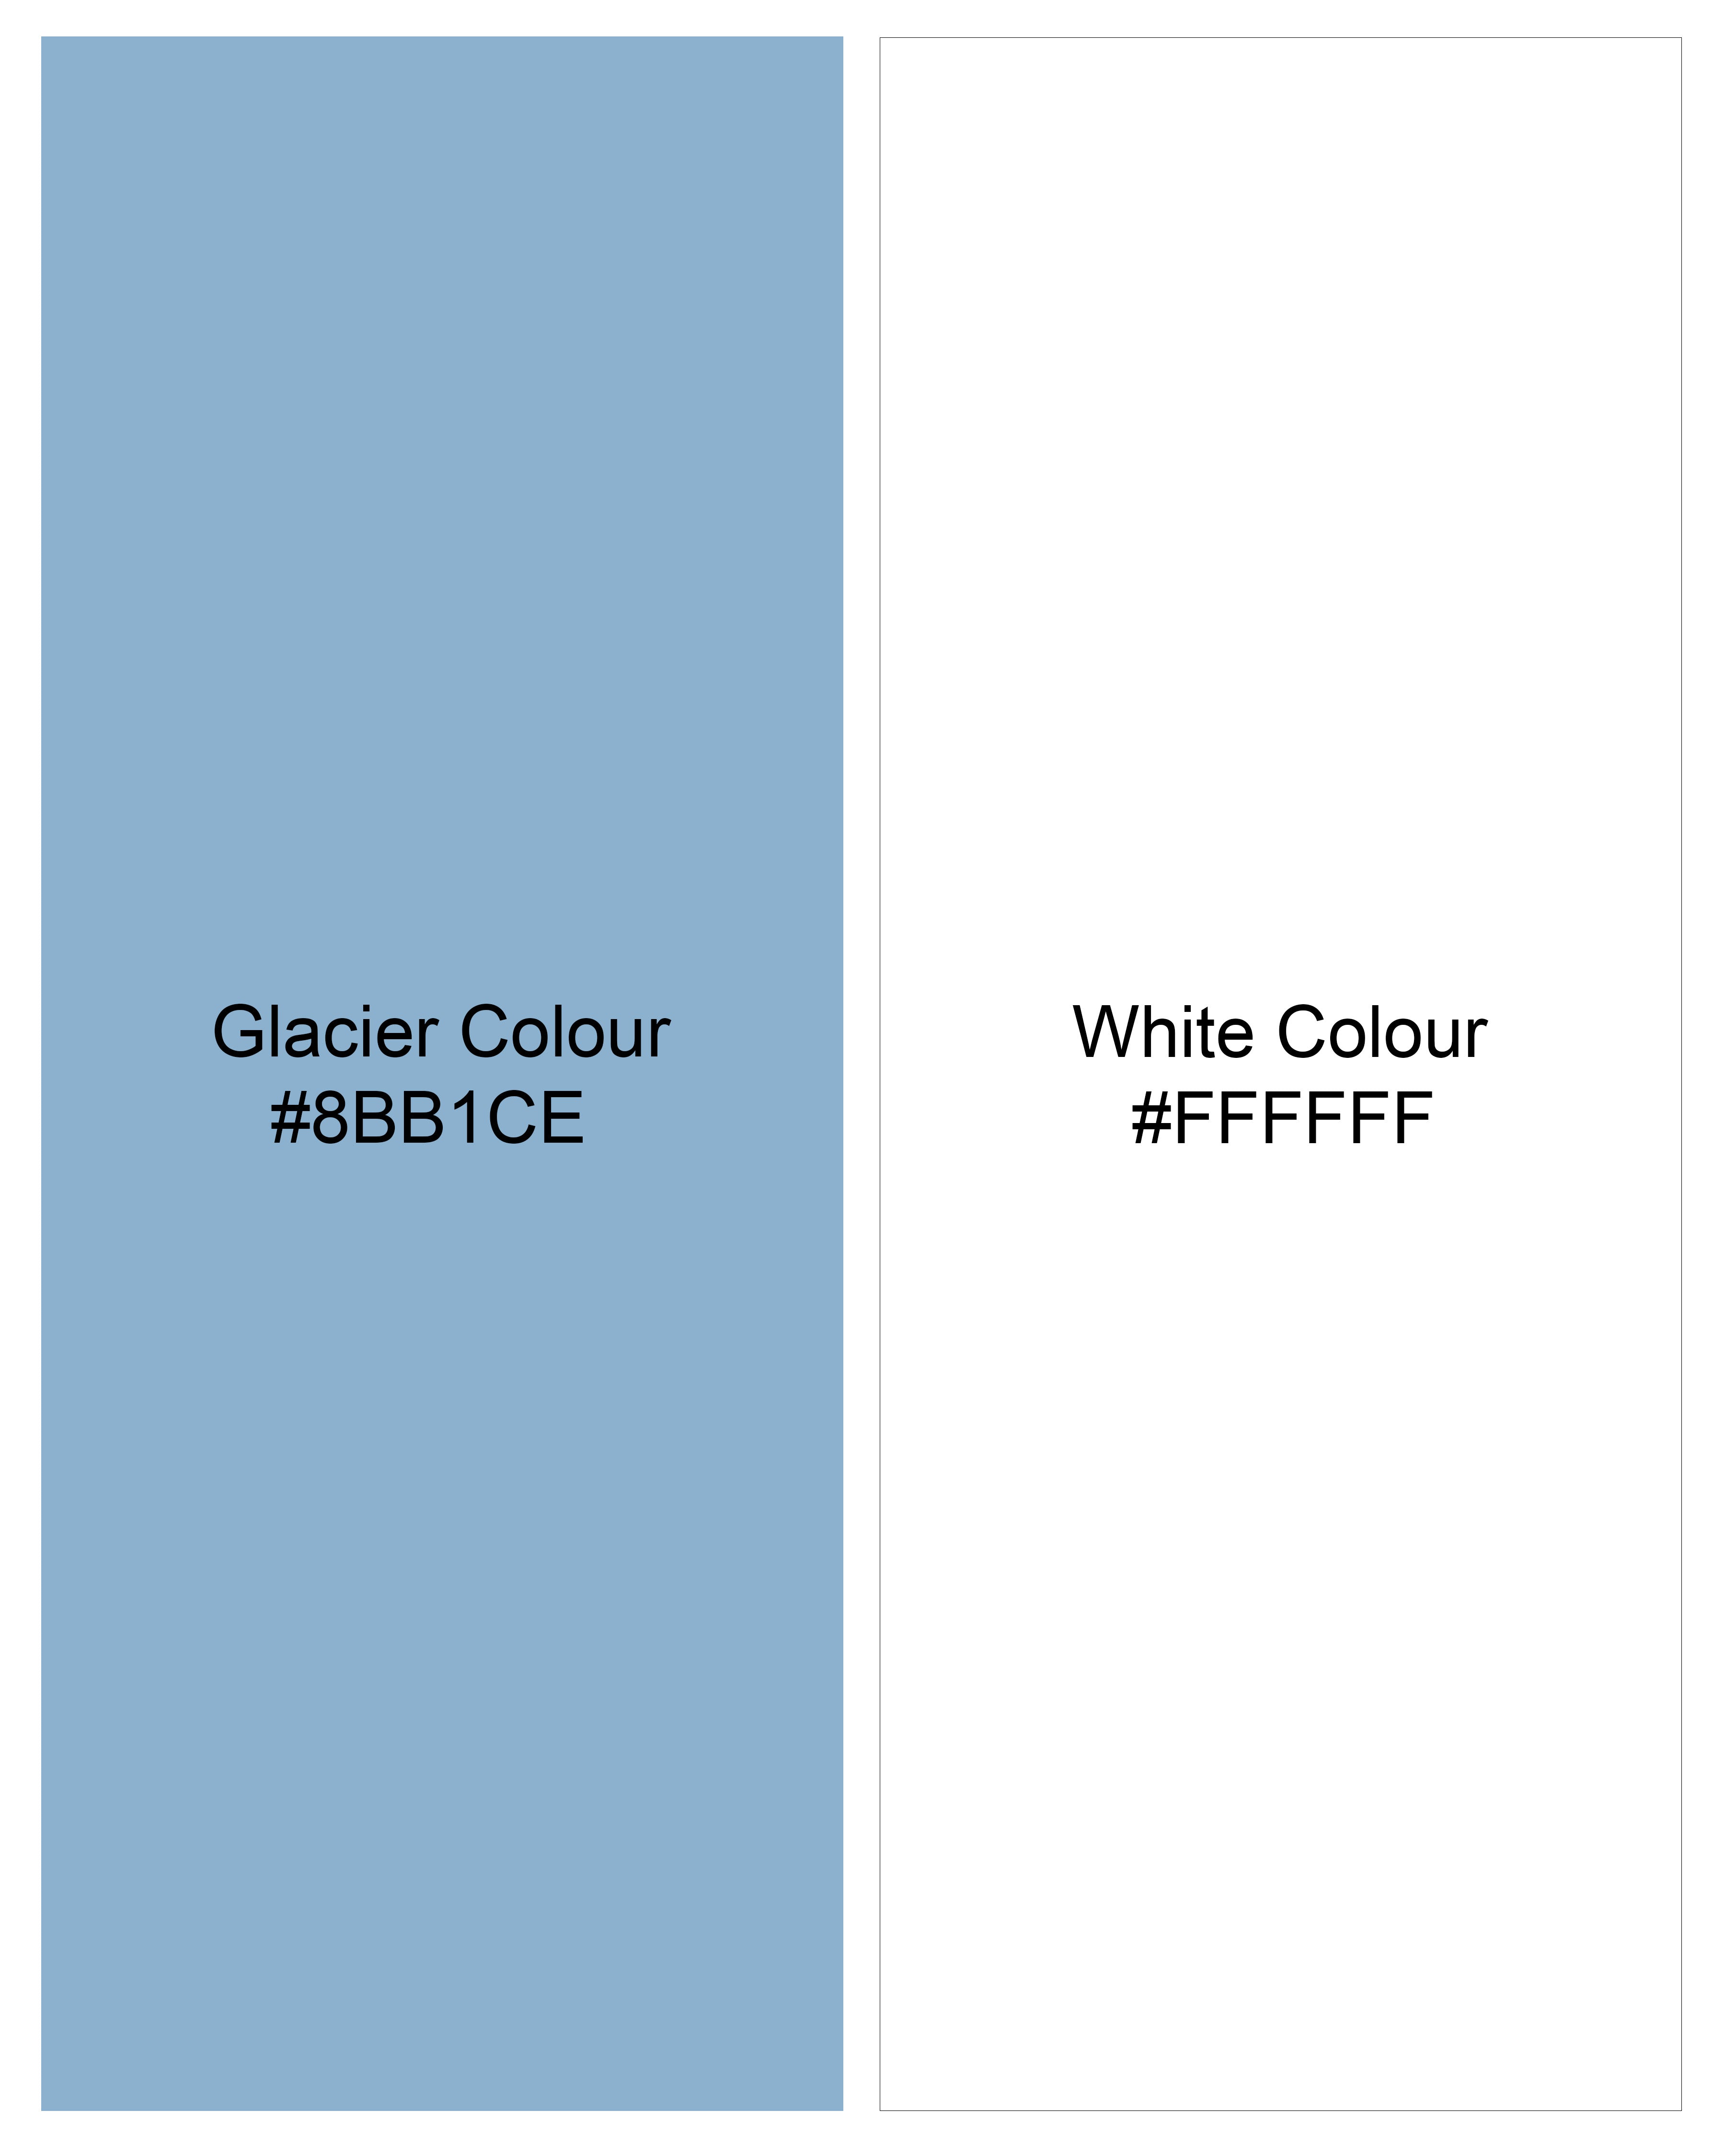 Glacier Blue Textured Twill Premium Cotton Double Collar Designer Shirt 9980-P432-38, 9980-P432-H-38, 9980-P432-39, 9980-P432-H-39, 9980-P432-40, 9980-P432-H-40, 9980-P432-42, 9980-P432-H-42, 9980-P432-44, 9980-P432-H-44, 9980-P432-46, 9980-P432-H-46, 9980-P432-48, 9980-P432-H-48, 9980-P432-50, 9980-P432-H-50, 9980-P432-52, 9980-P432-H-52	